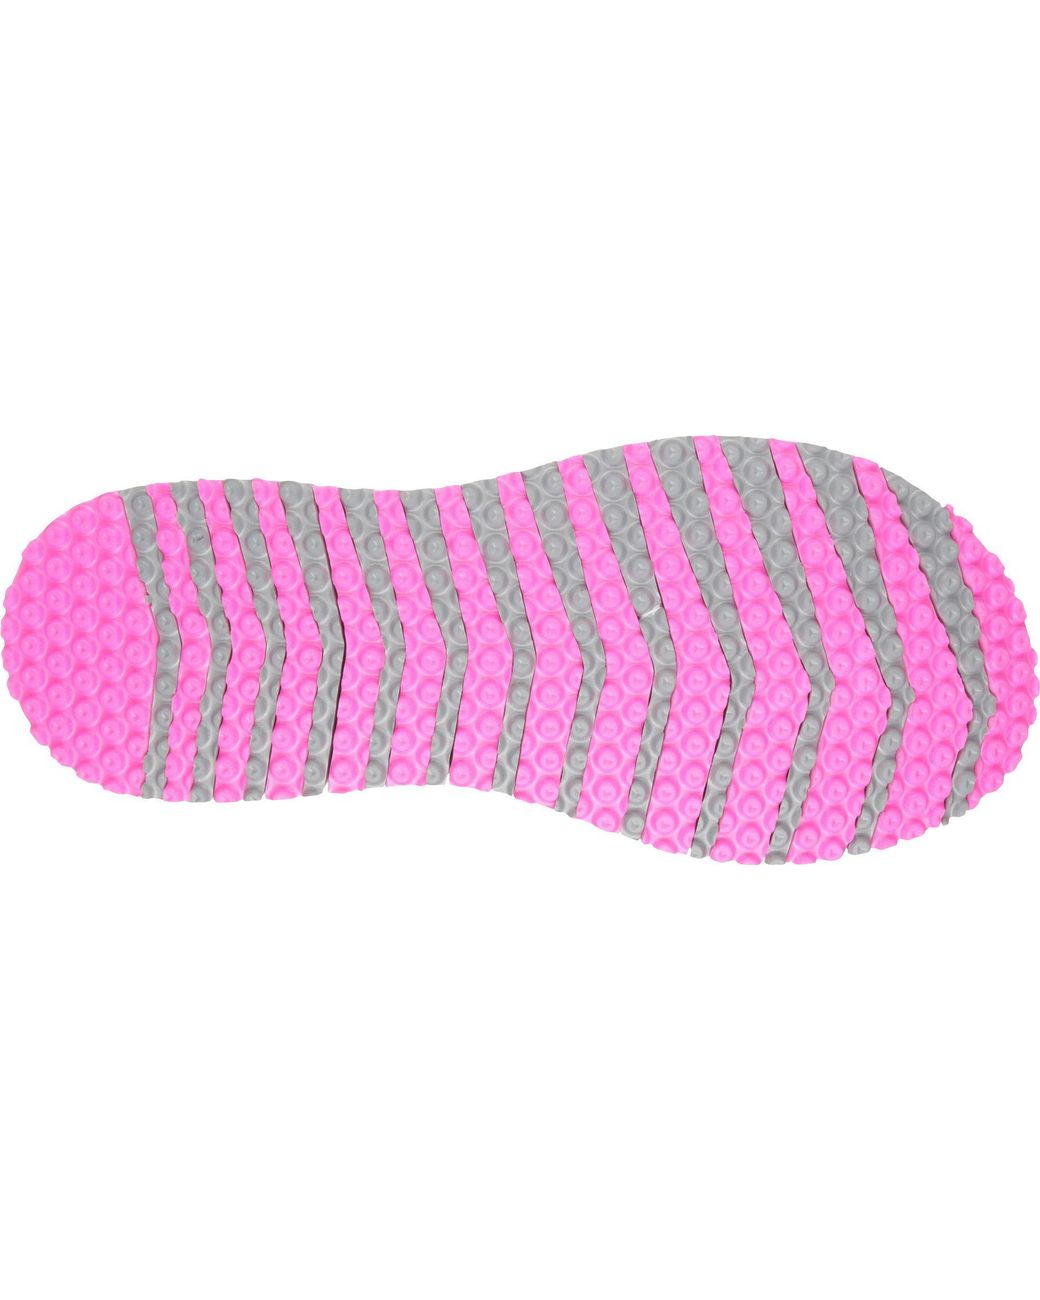 Skechers Go Flex Vitality Flip Flops in Hot Pink (Pink) | Lyst